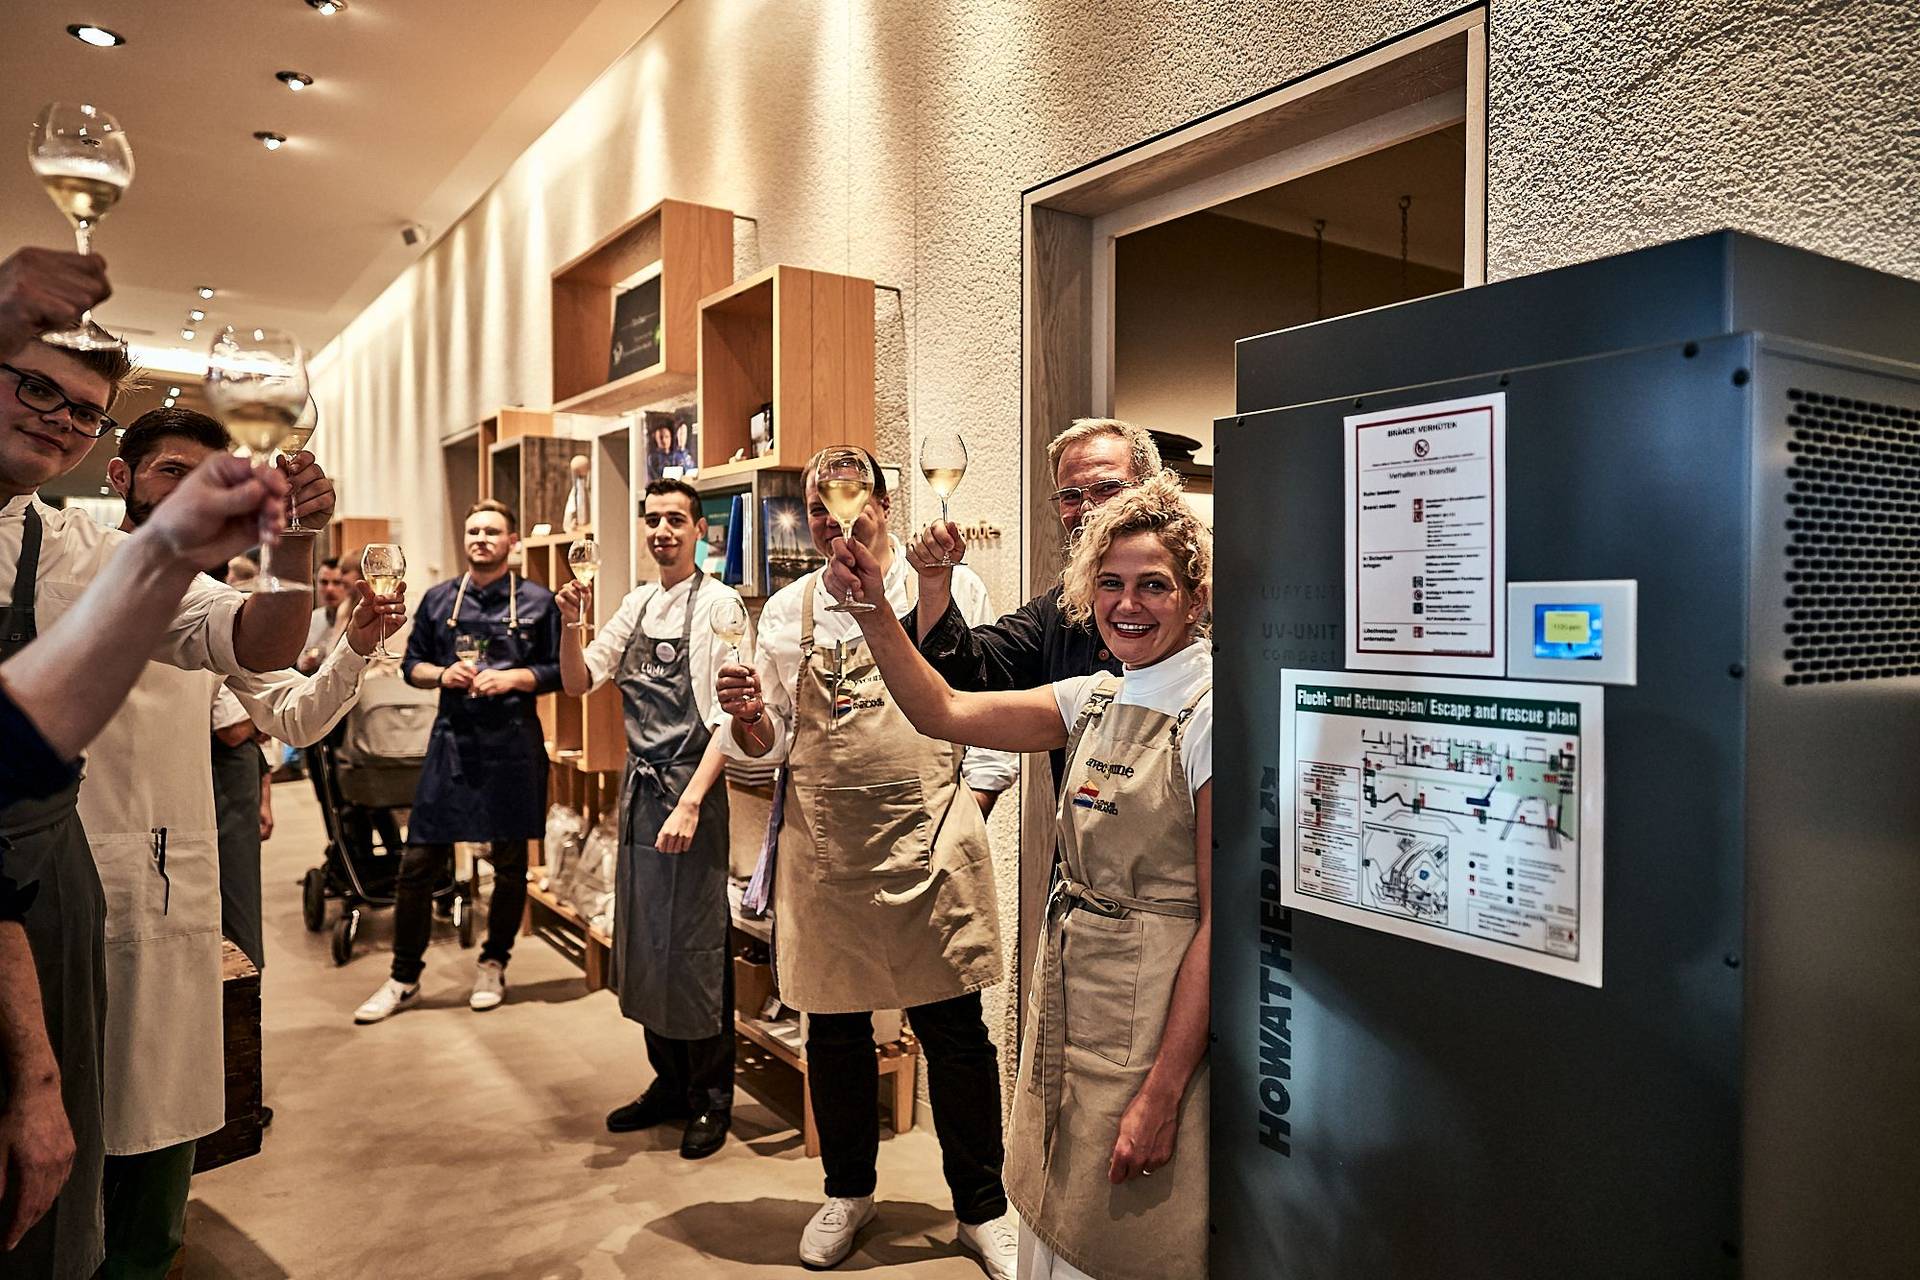 event photography of the lumi kitchen volume three at seezeitlodge bostalsee